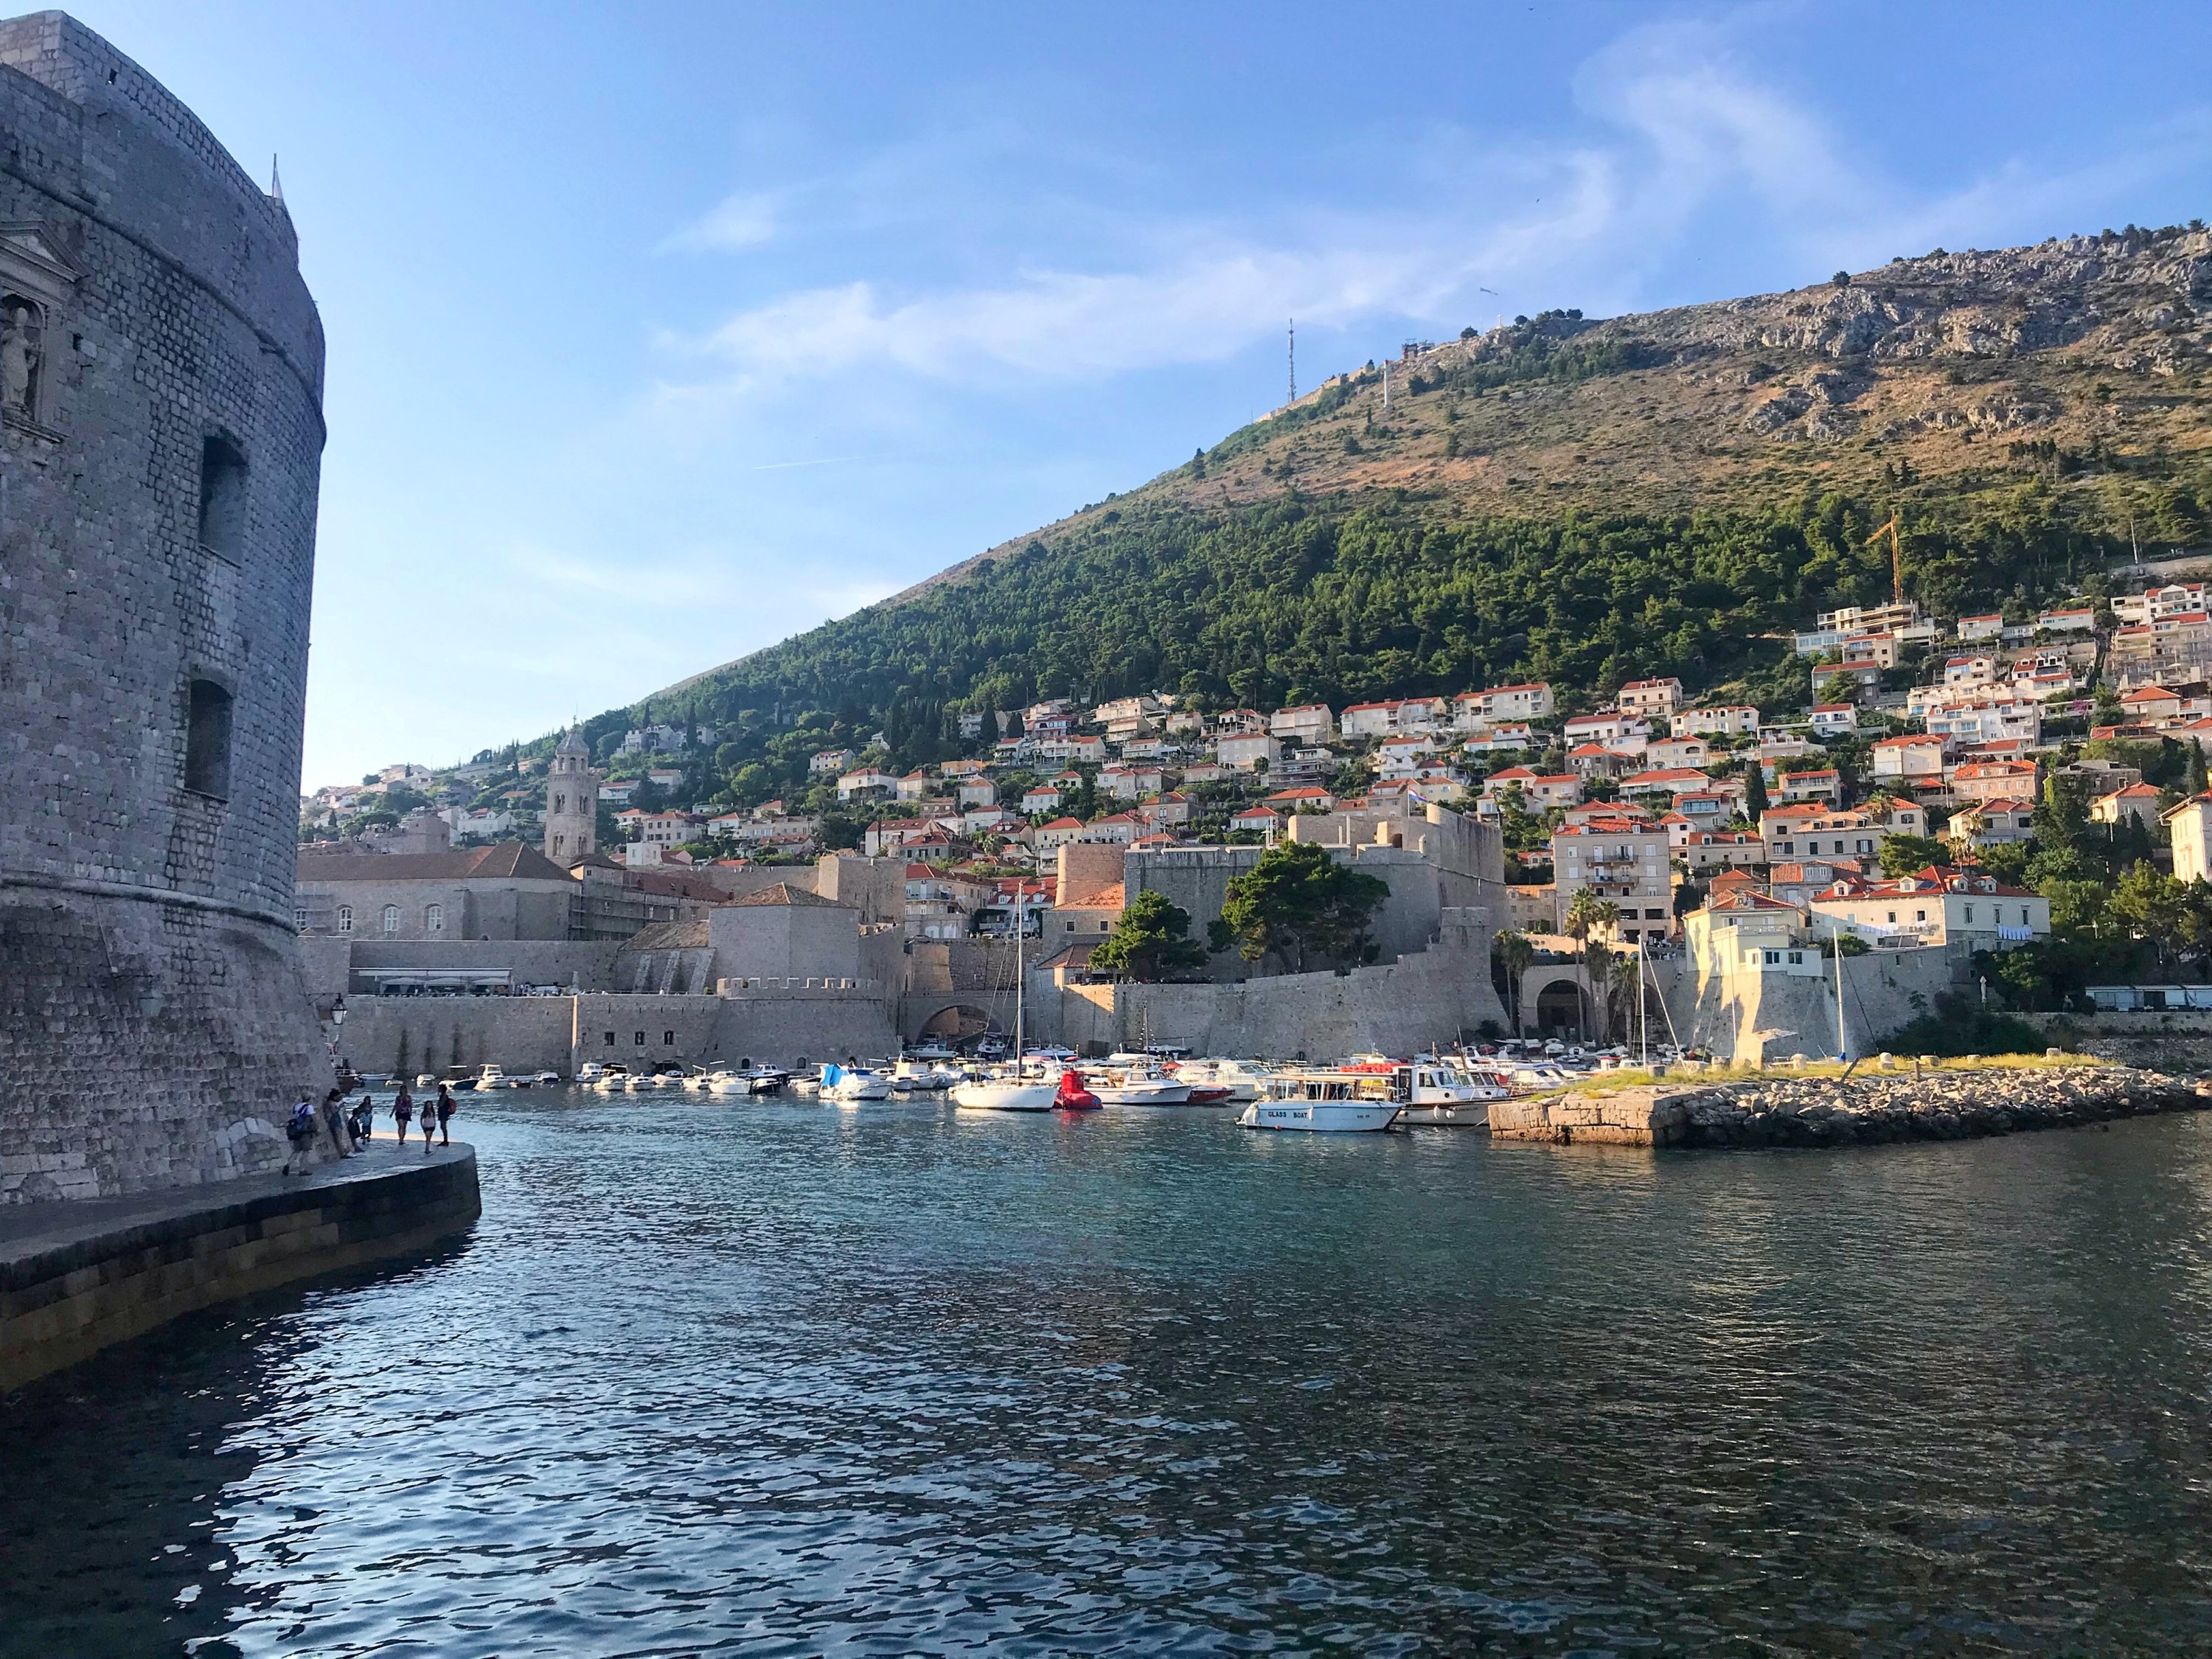 The marina of Dubrovnik, southern Croatia. (Photo by Özge Şengelen)